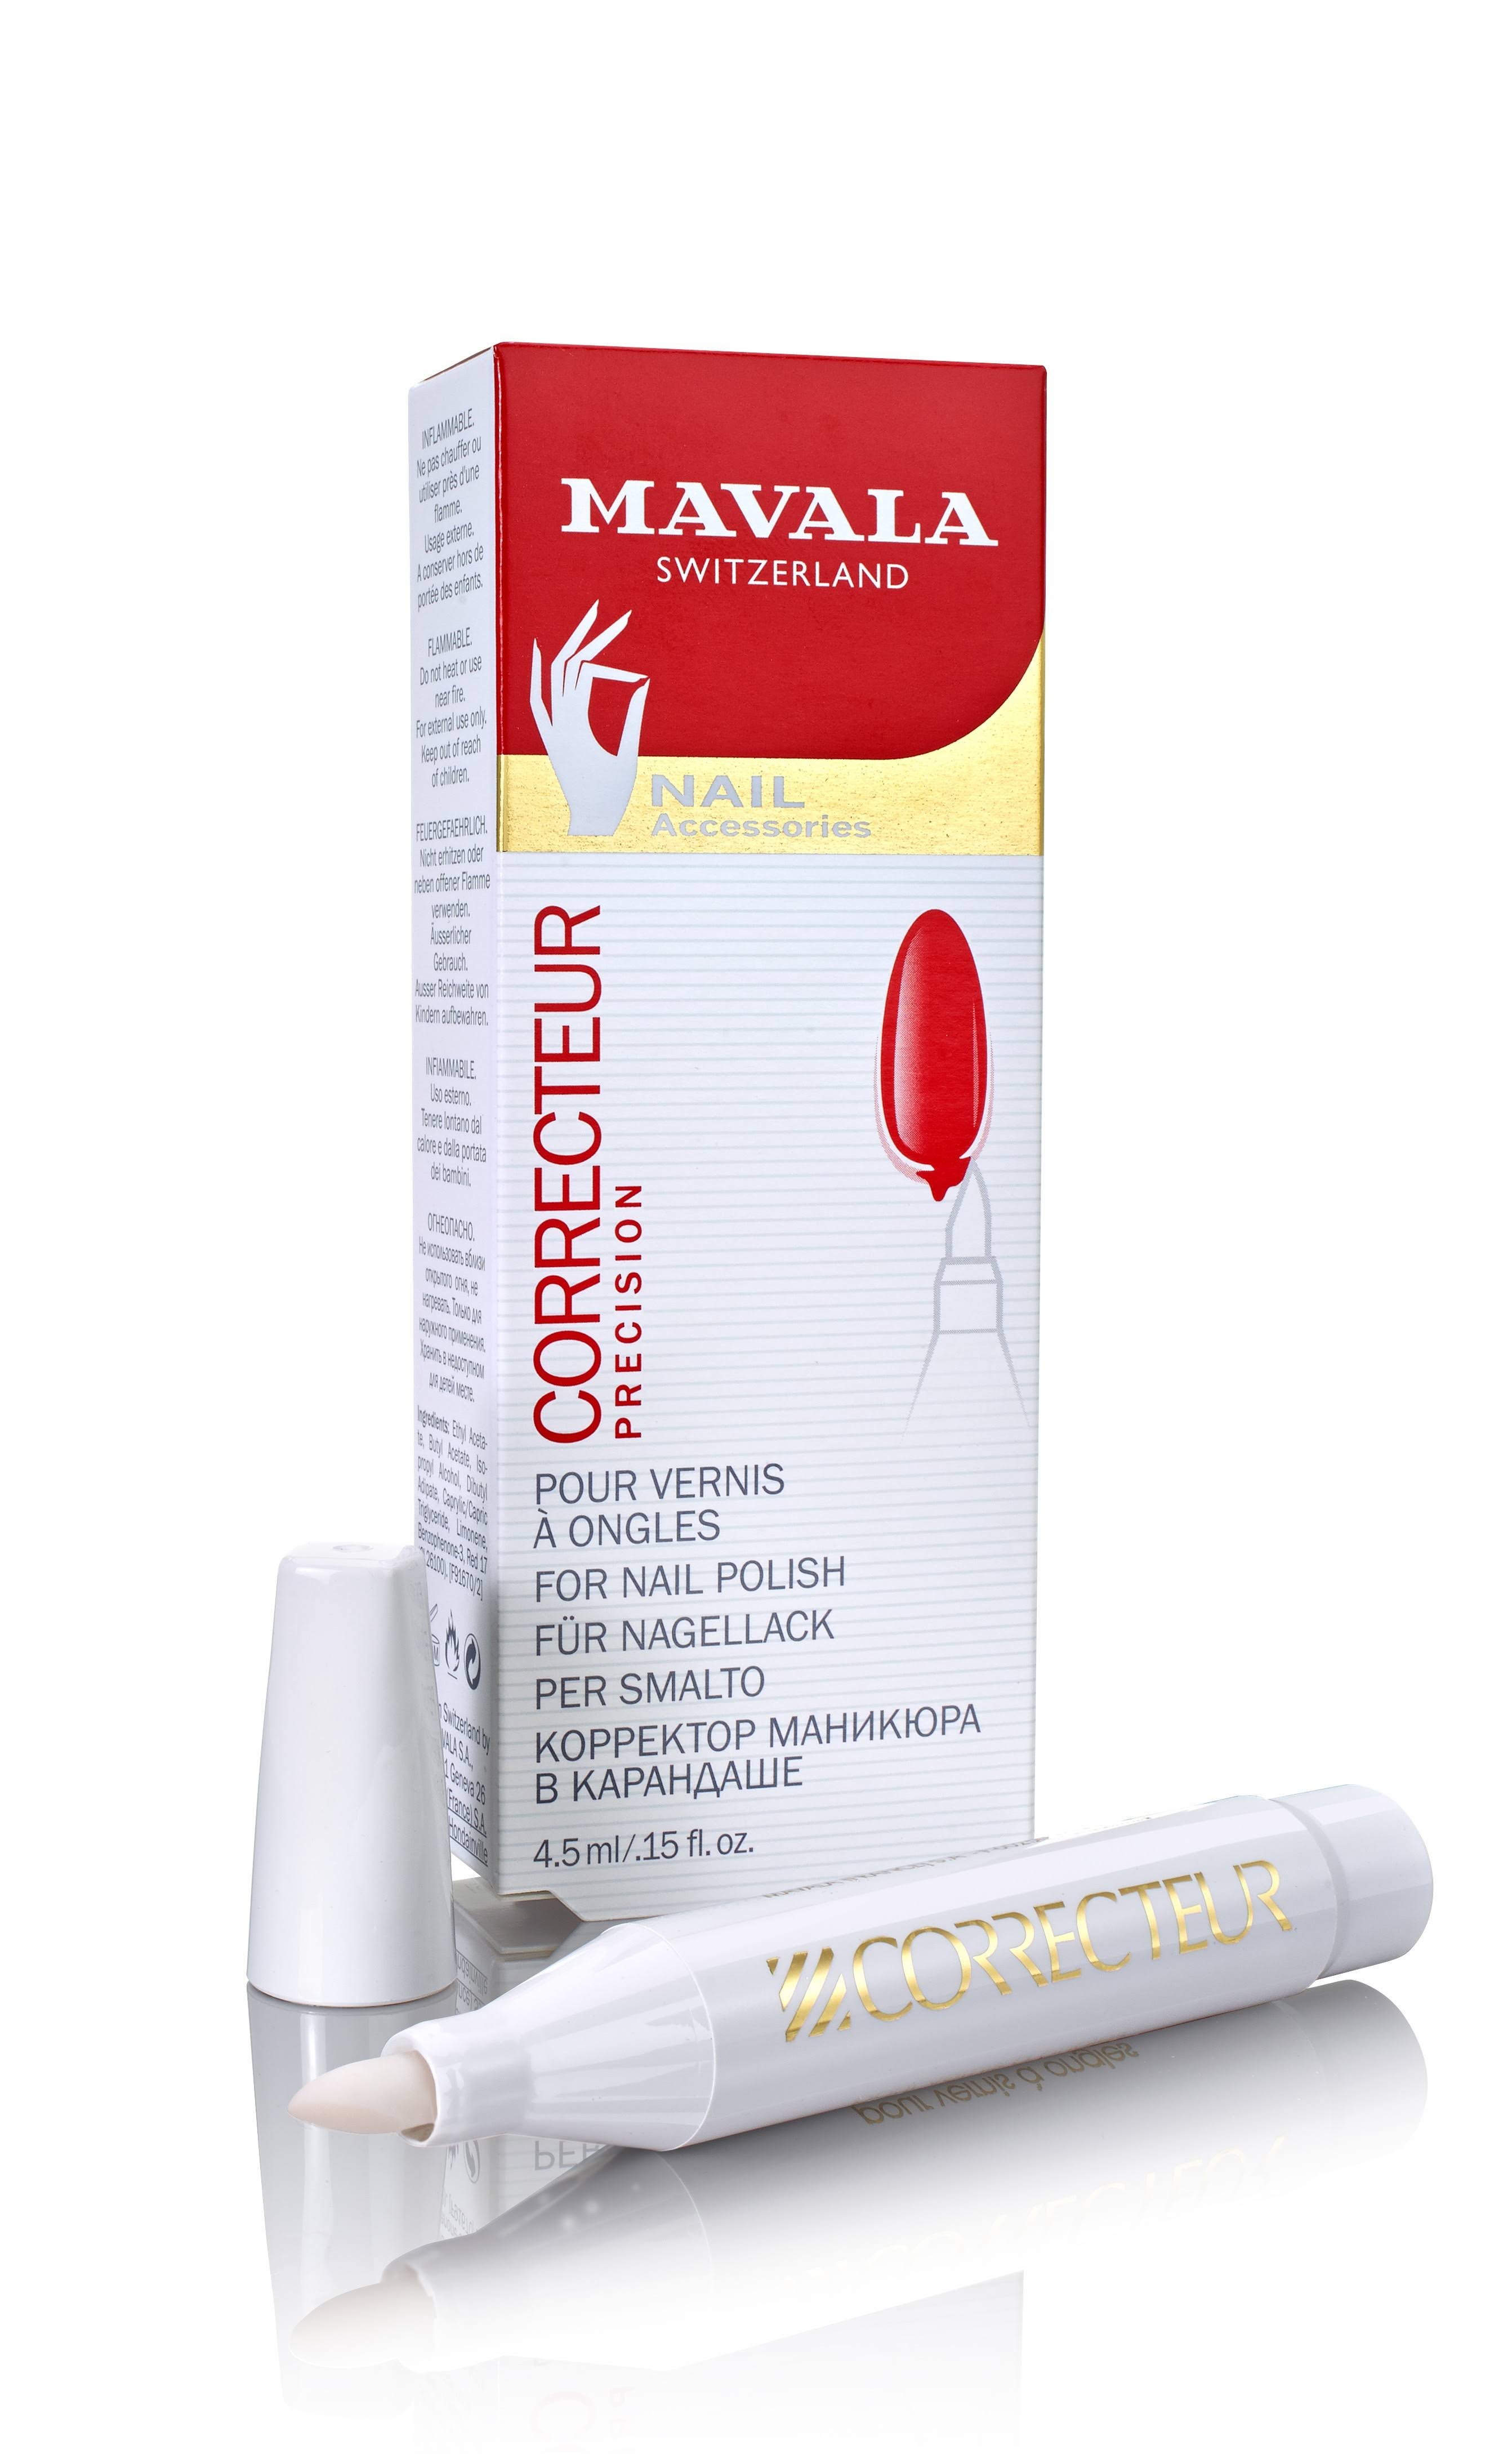 Mavala Switzerland Correcteur for Nail Polish - 4ml